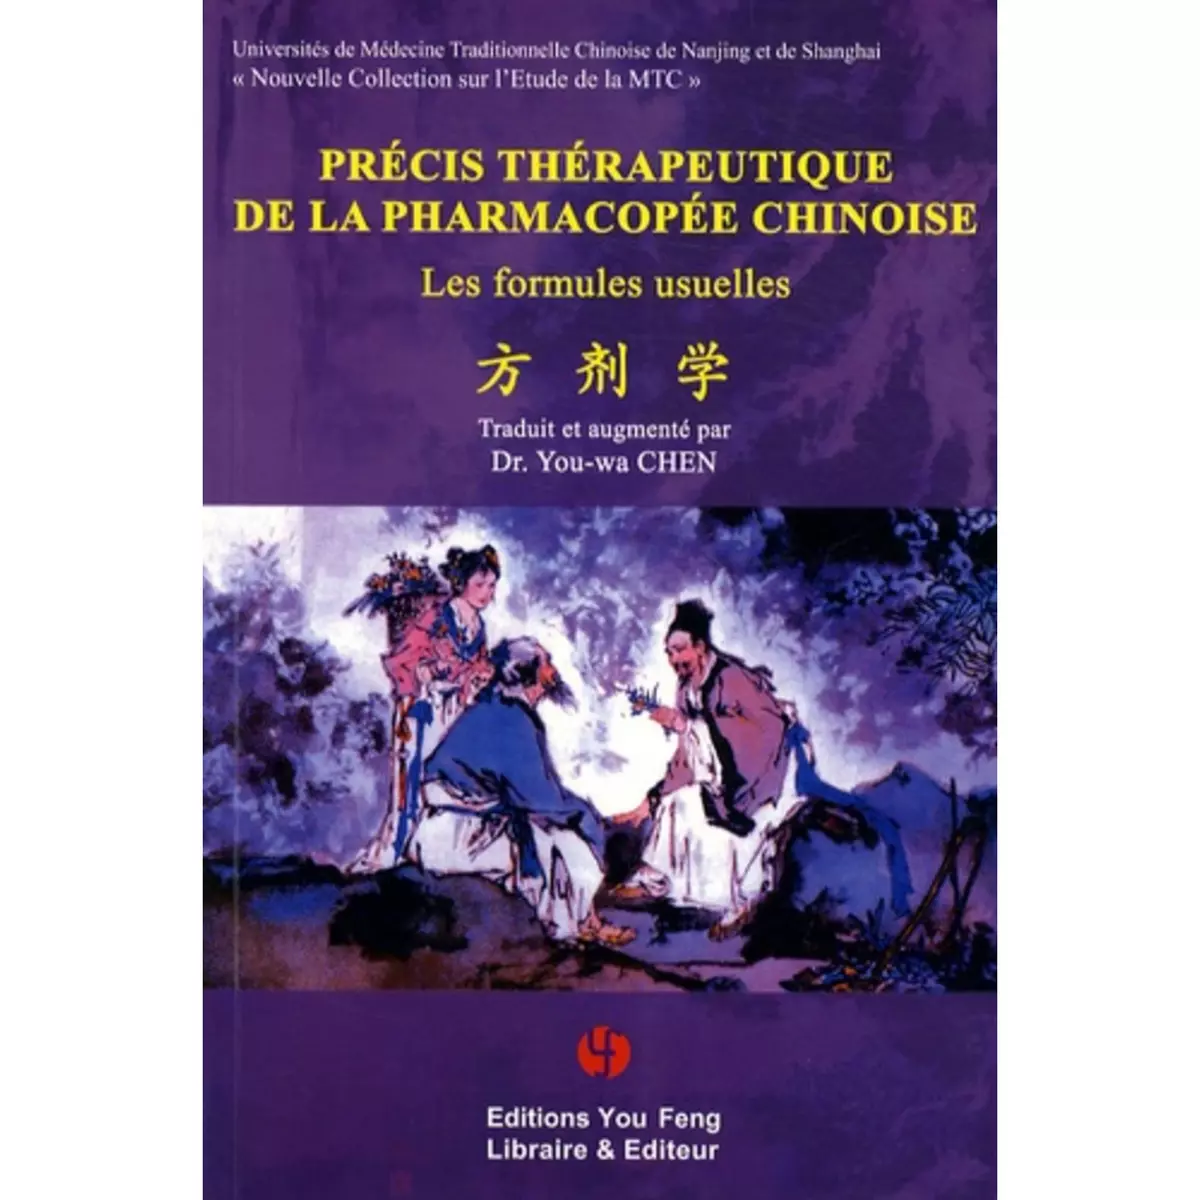  PRECIS THERAPEUTIQUE DE LA PHARMACOPEE CHINOISE. LES FORMULES USUELLES, Chen You-Wa